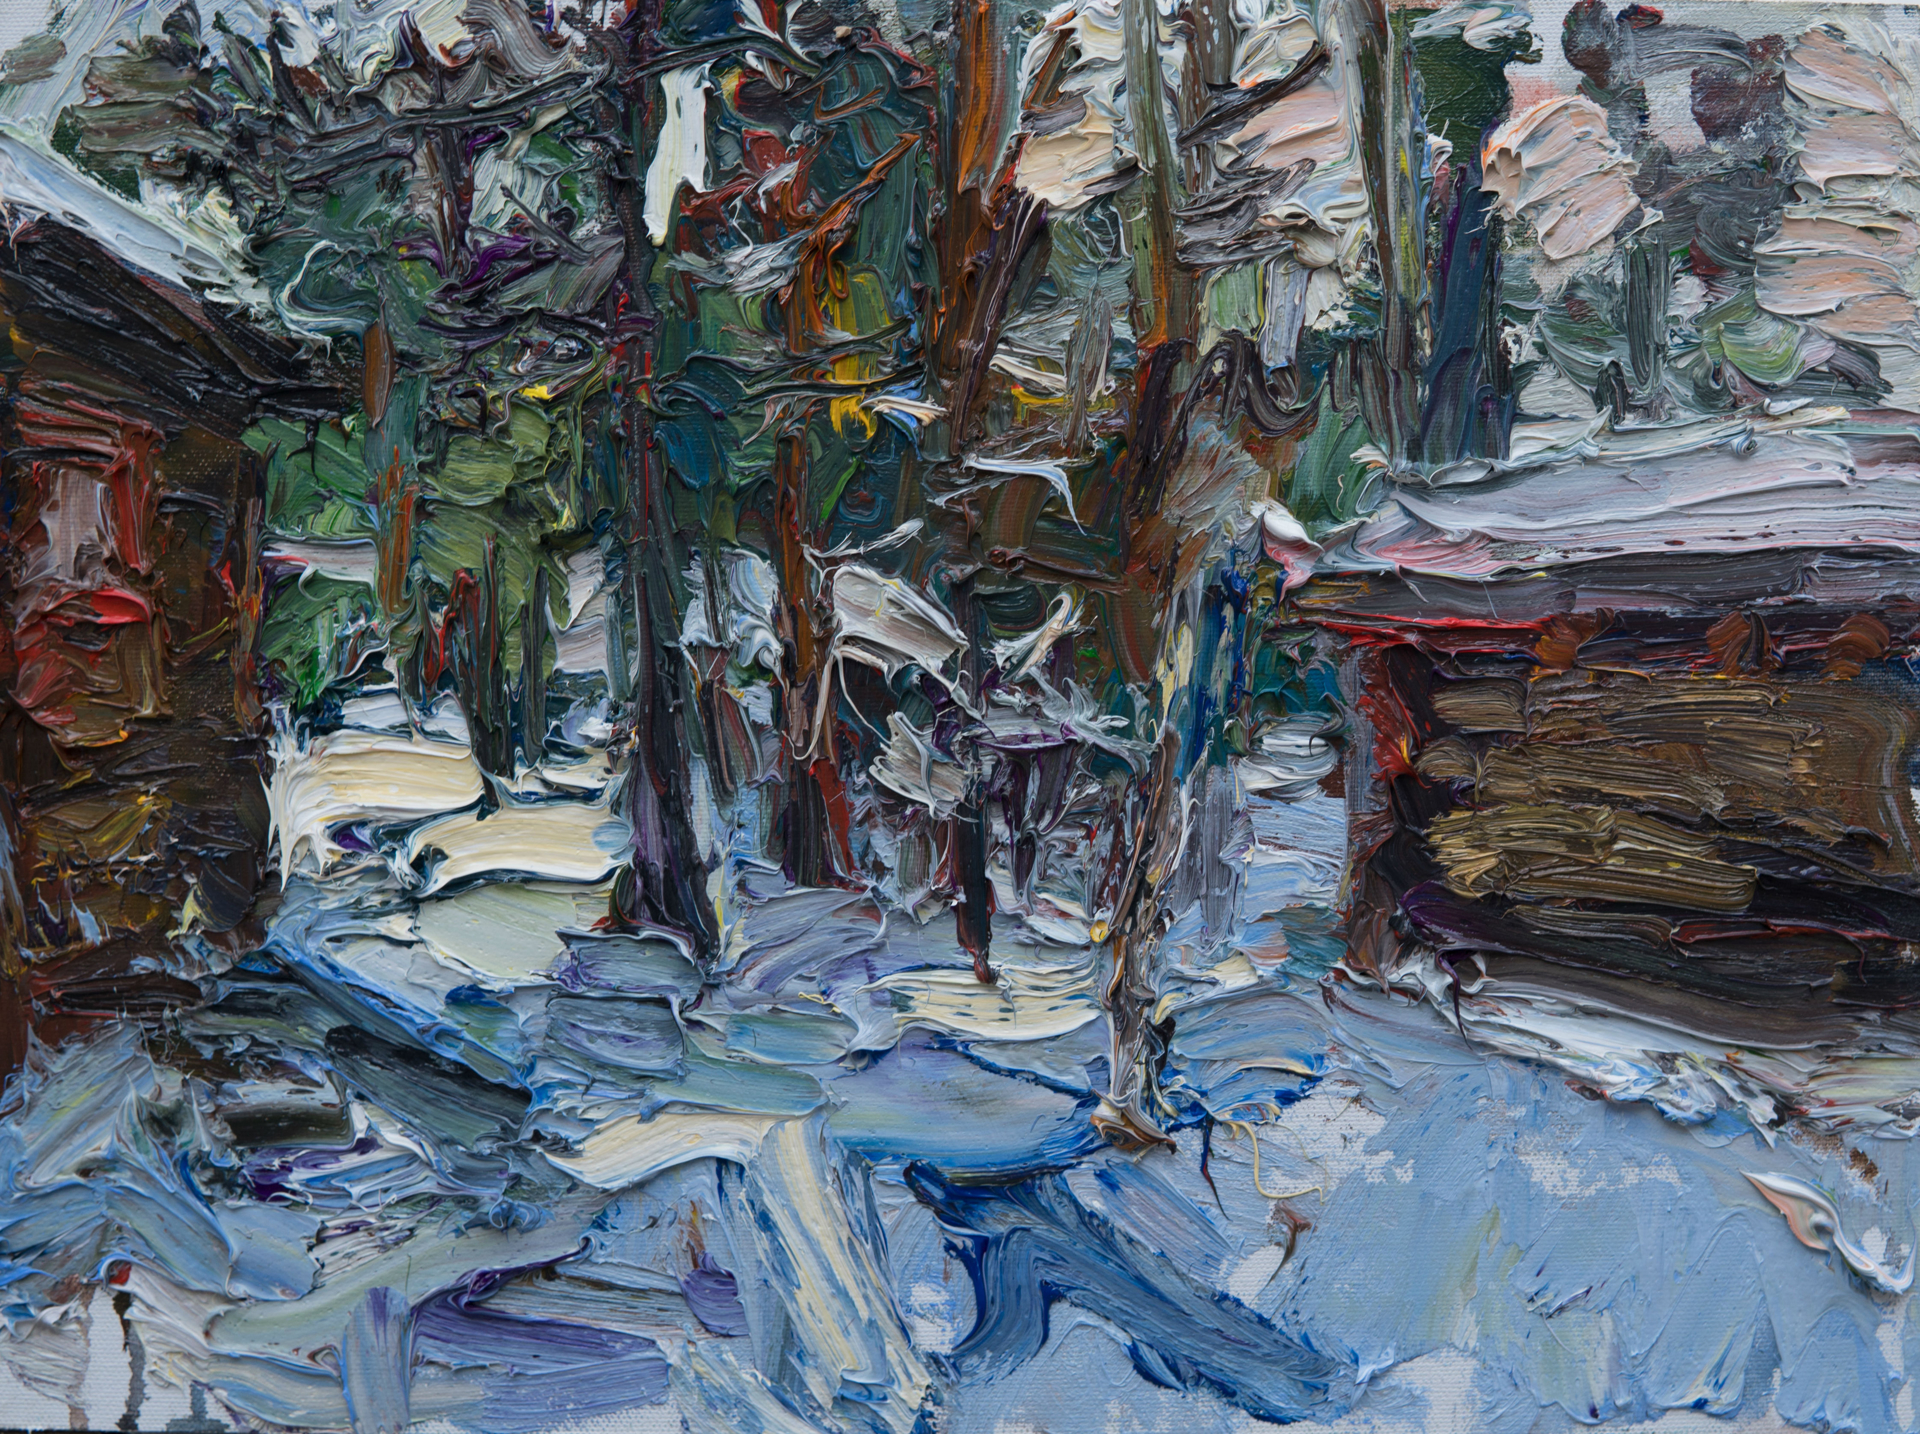 My Cabin: Winter in Finland by Ulrich Gleiter